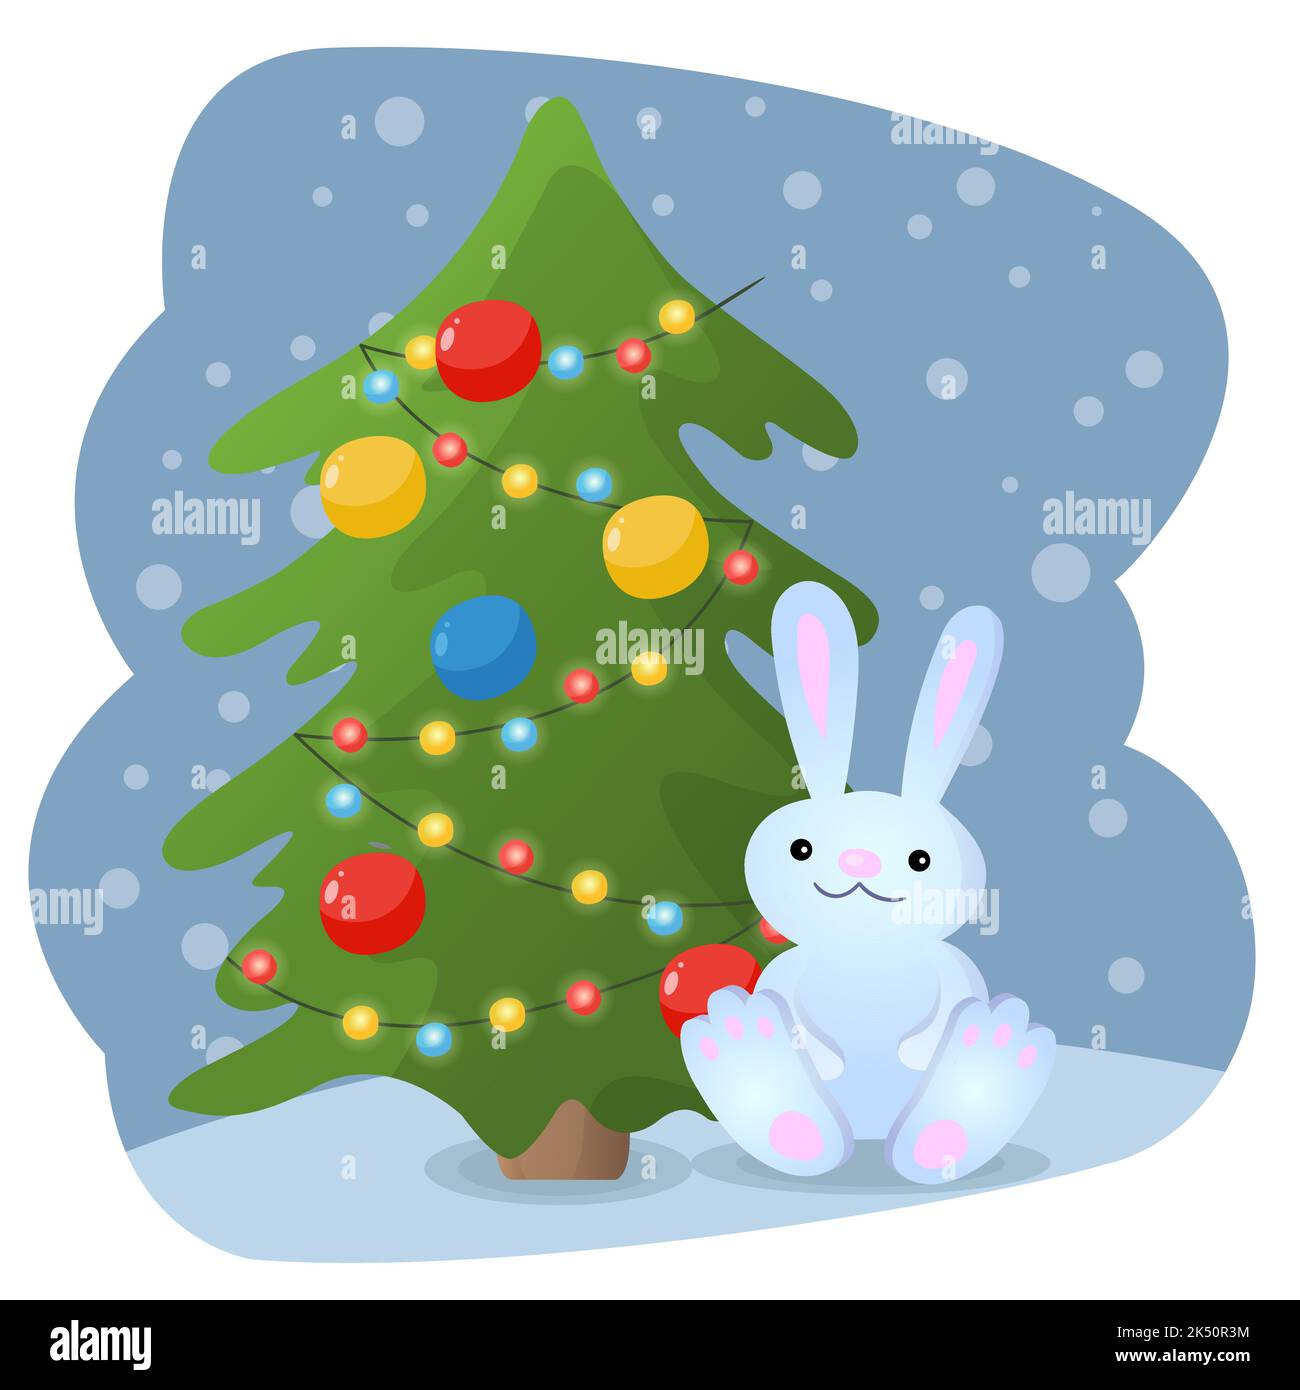  2023 Christmas Hanging Ornament Colorful Bunny Cartoon